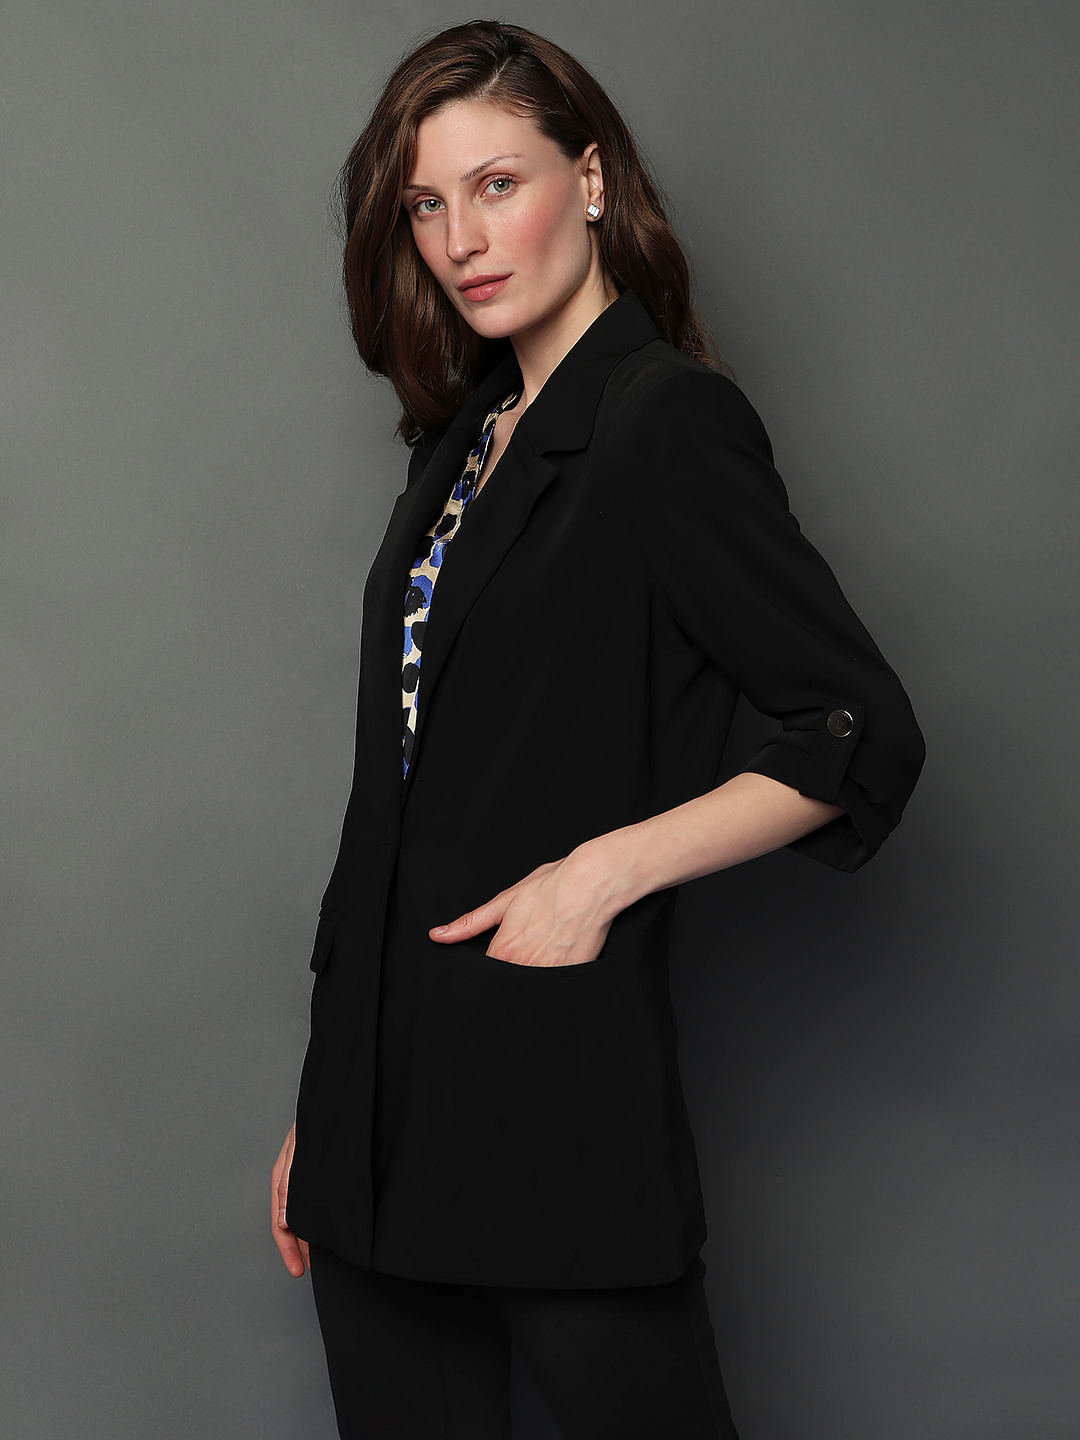 White Women's Suits Black Shawl Lapel Ladies Jacket Formal Business  Party Blazer | eBay